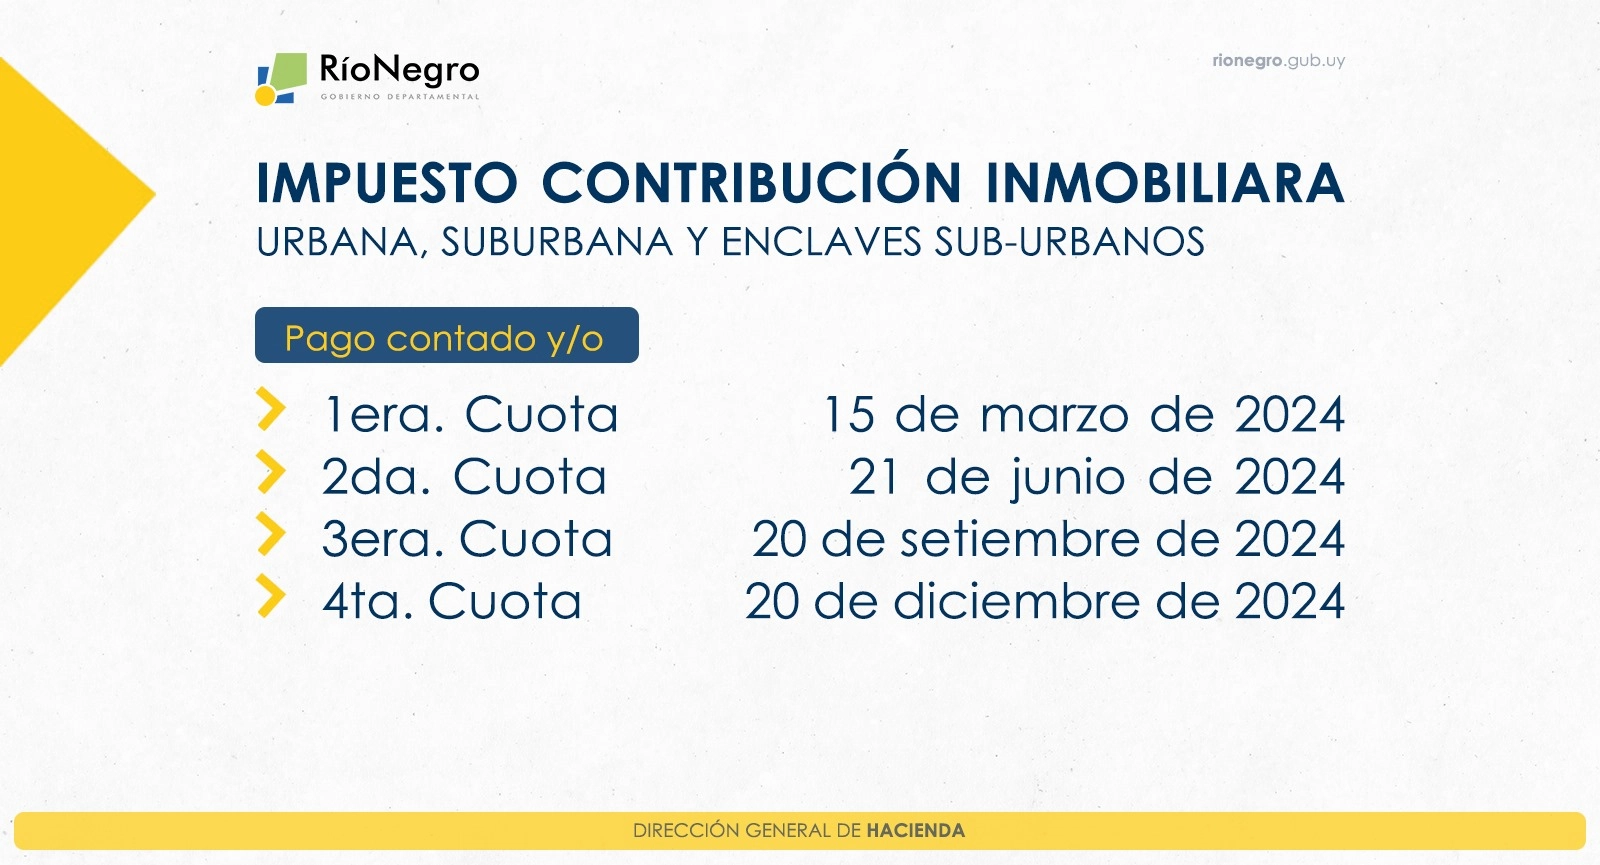 Calendario vencimiento contribución inmobiliaria urbana Río Negro.